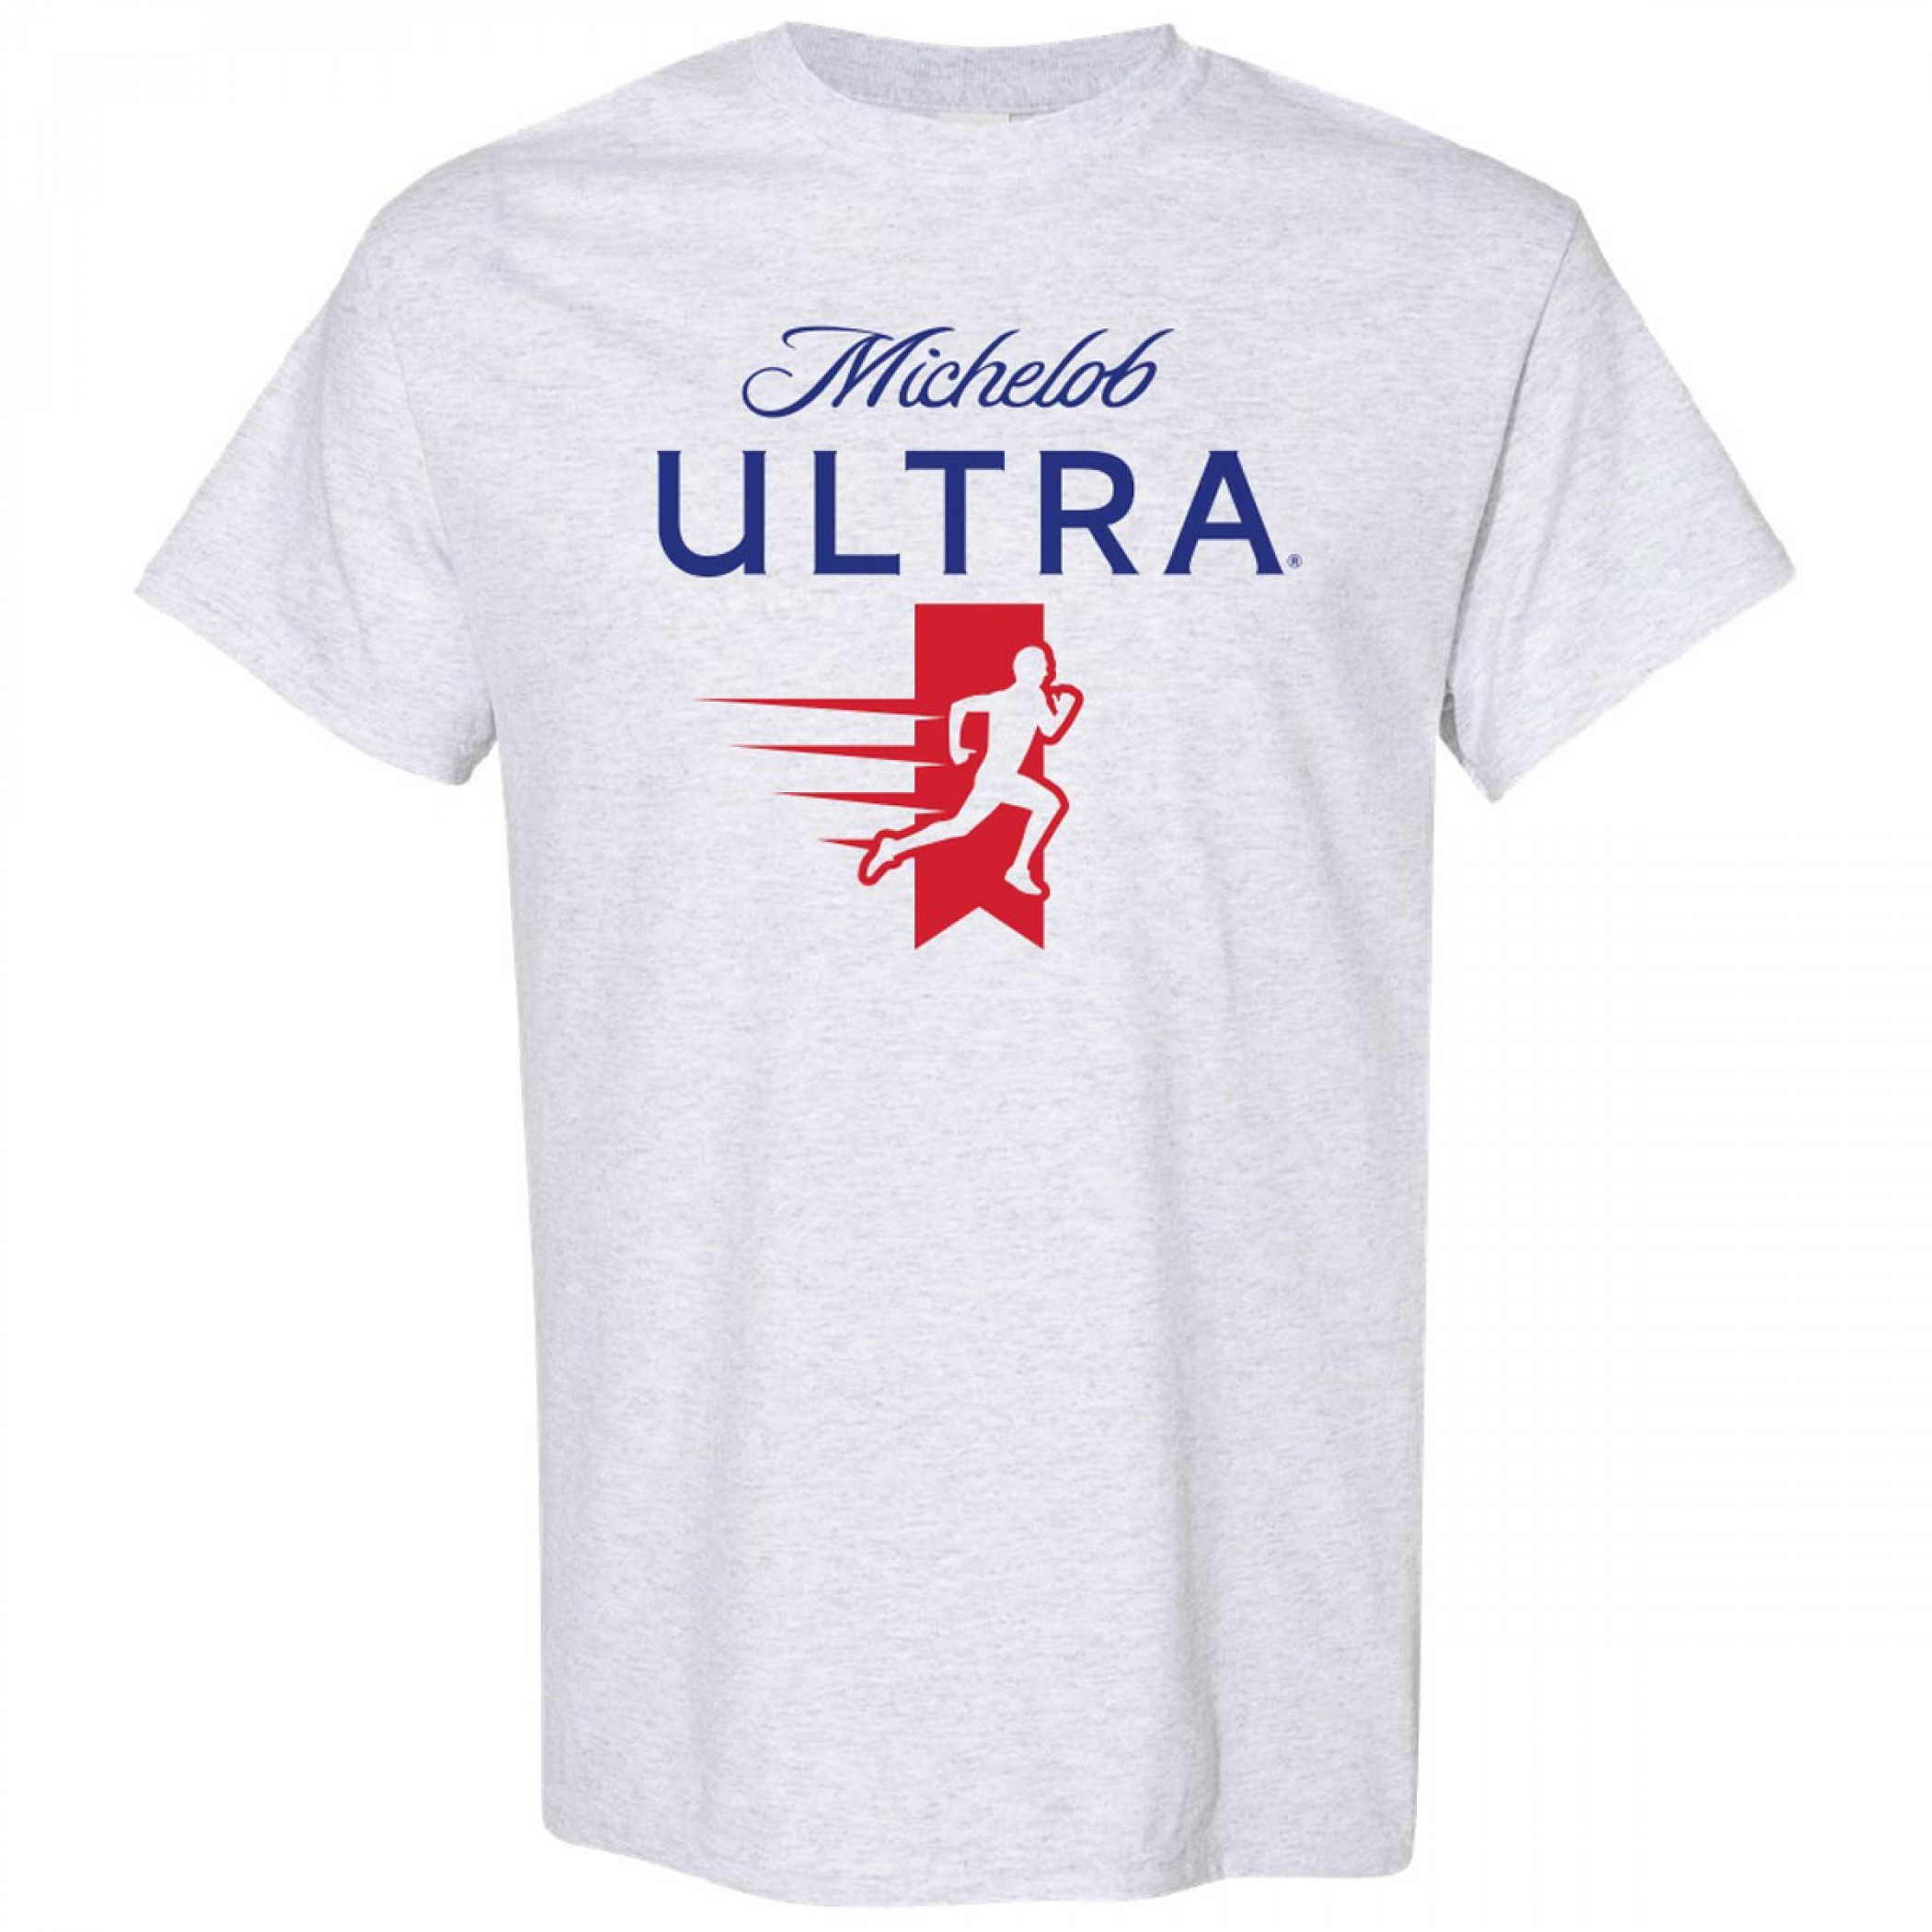 Michelob Ultra Marathon Running T-Shirt